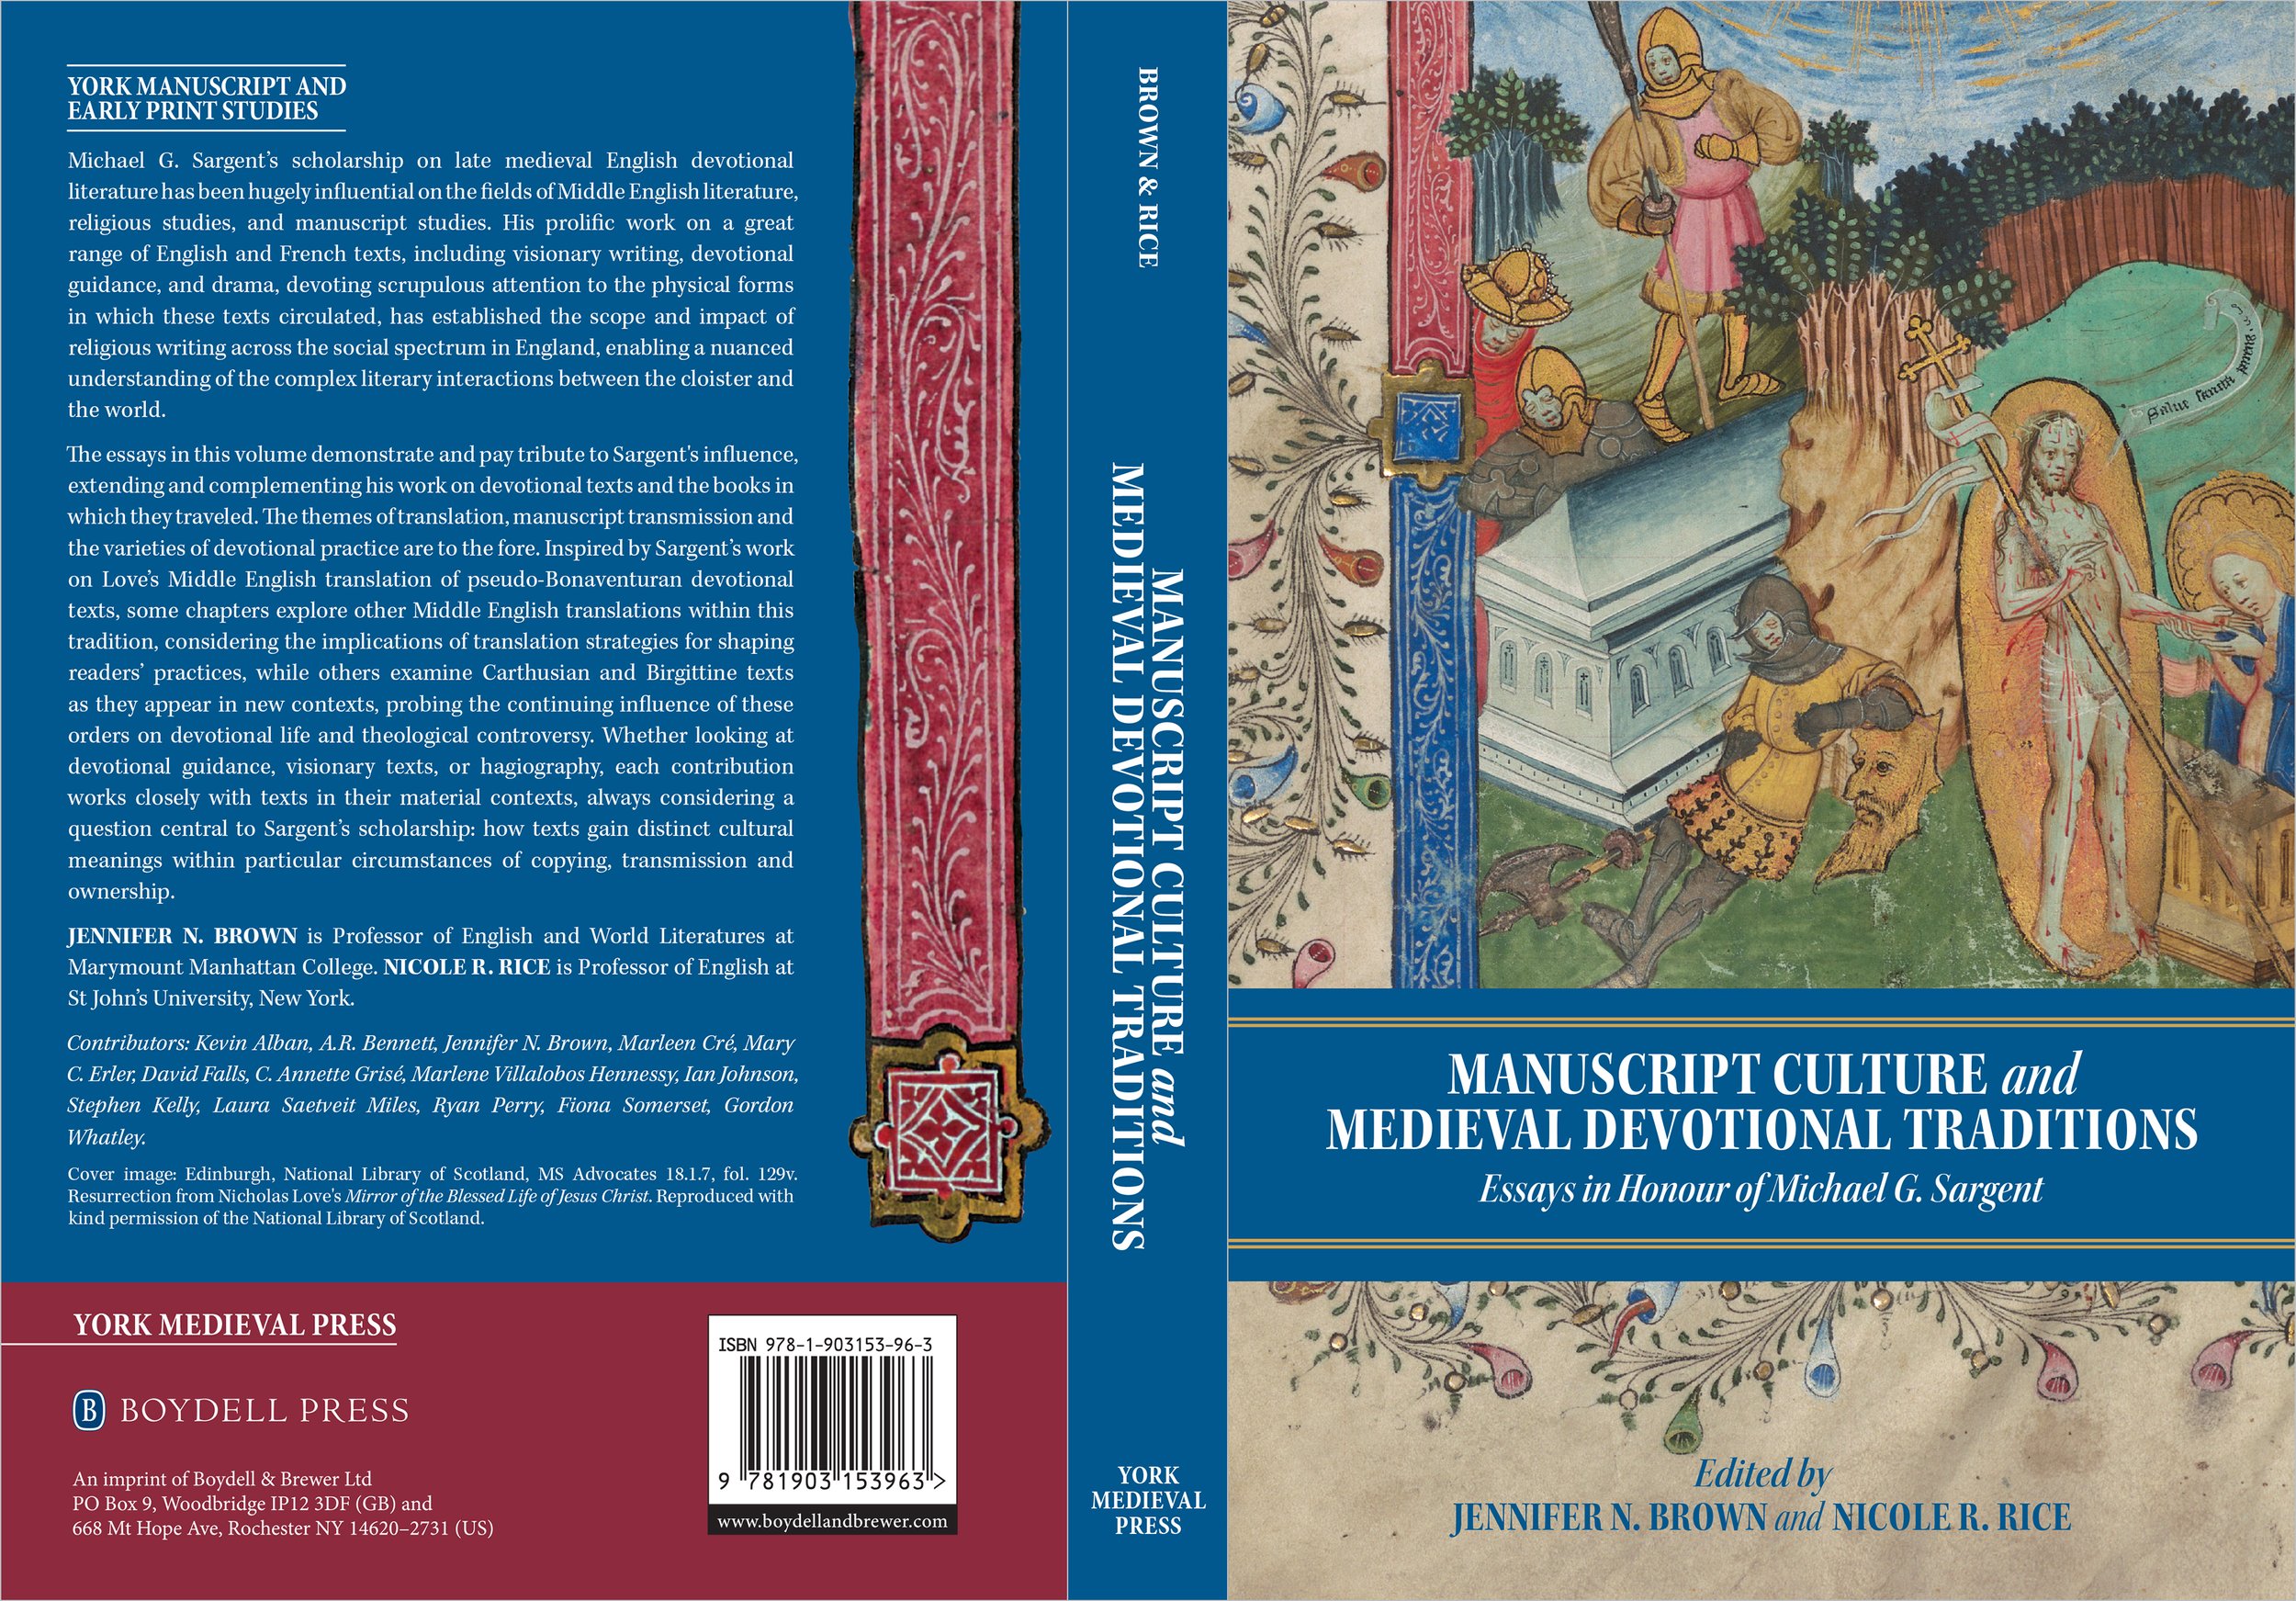 Manuscript Culture and MedIieval Devotional Traditions